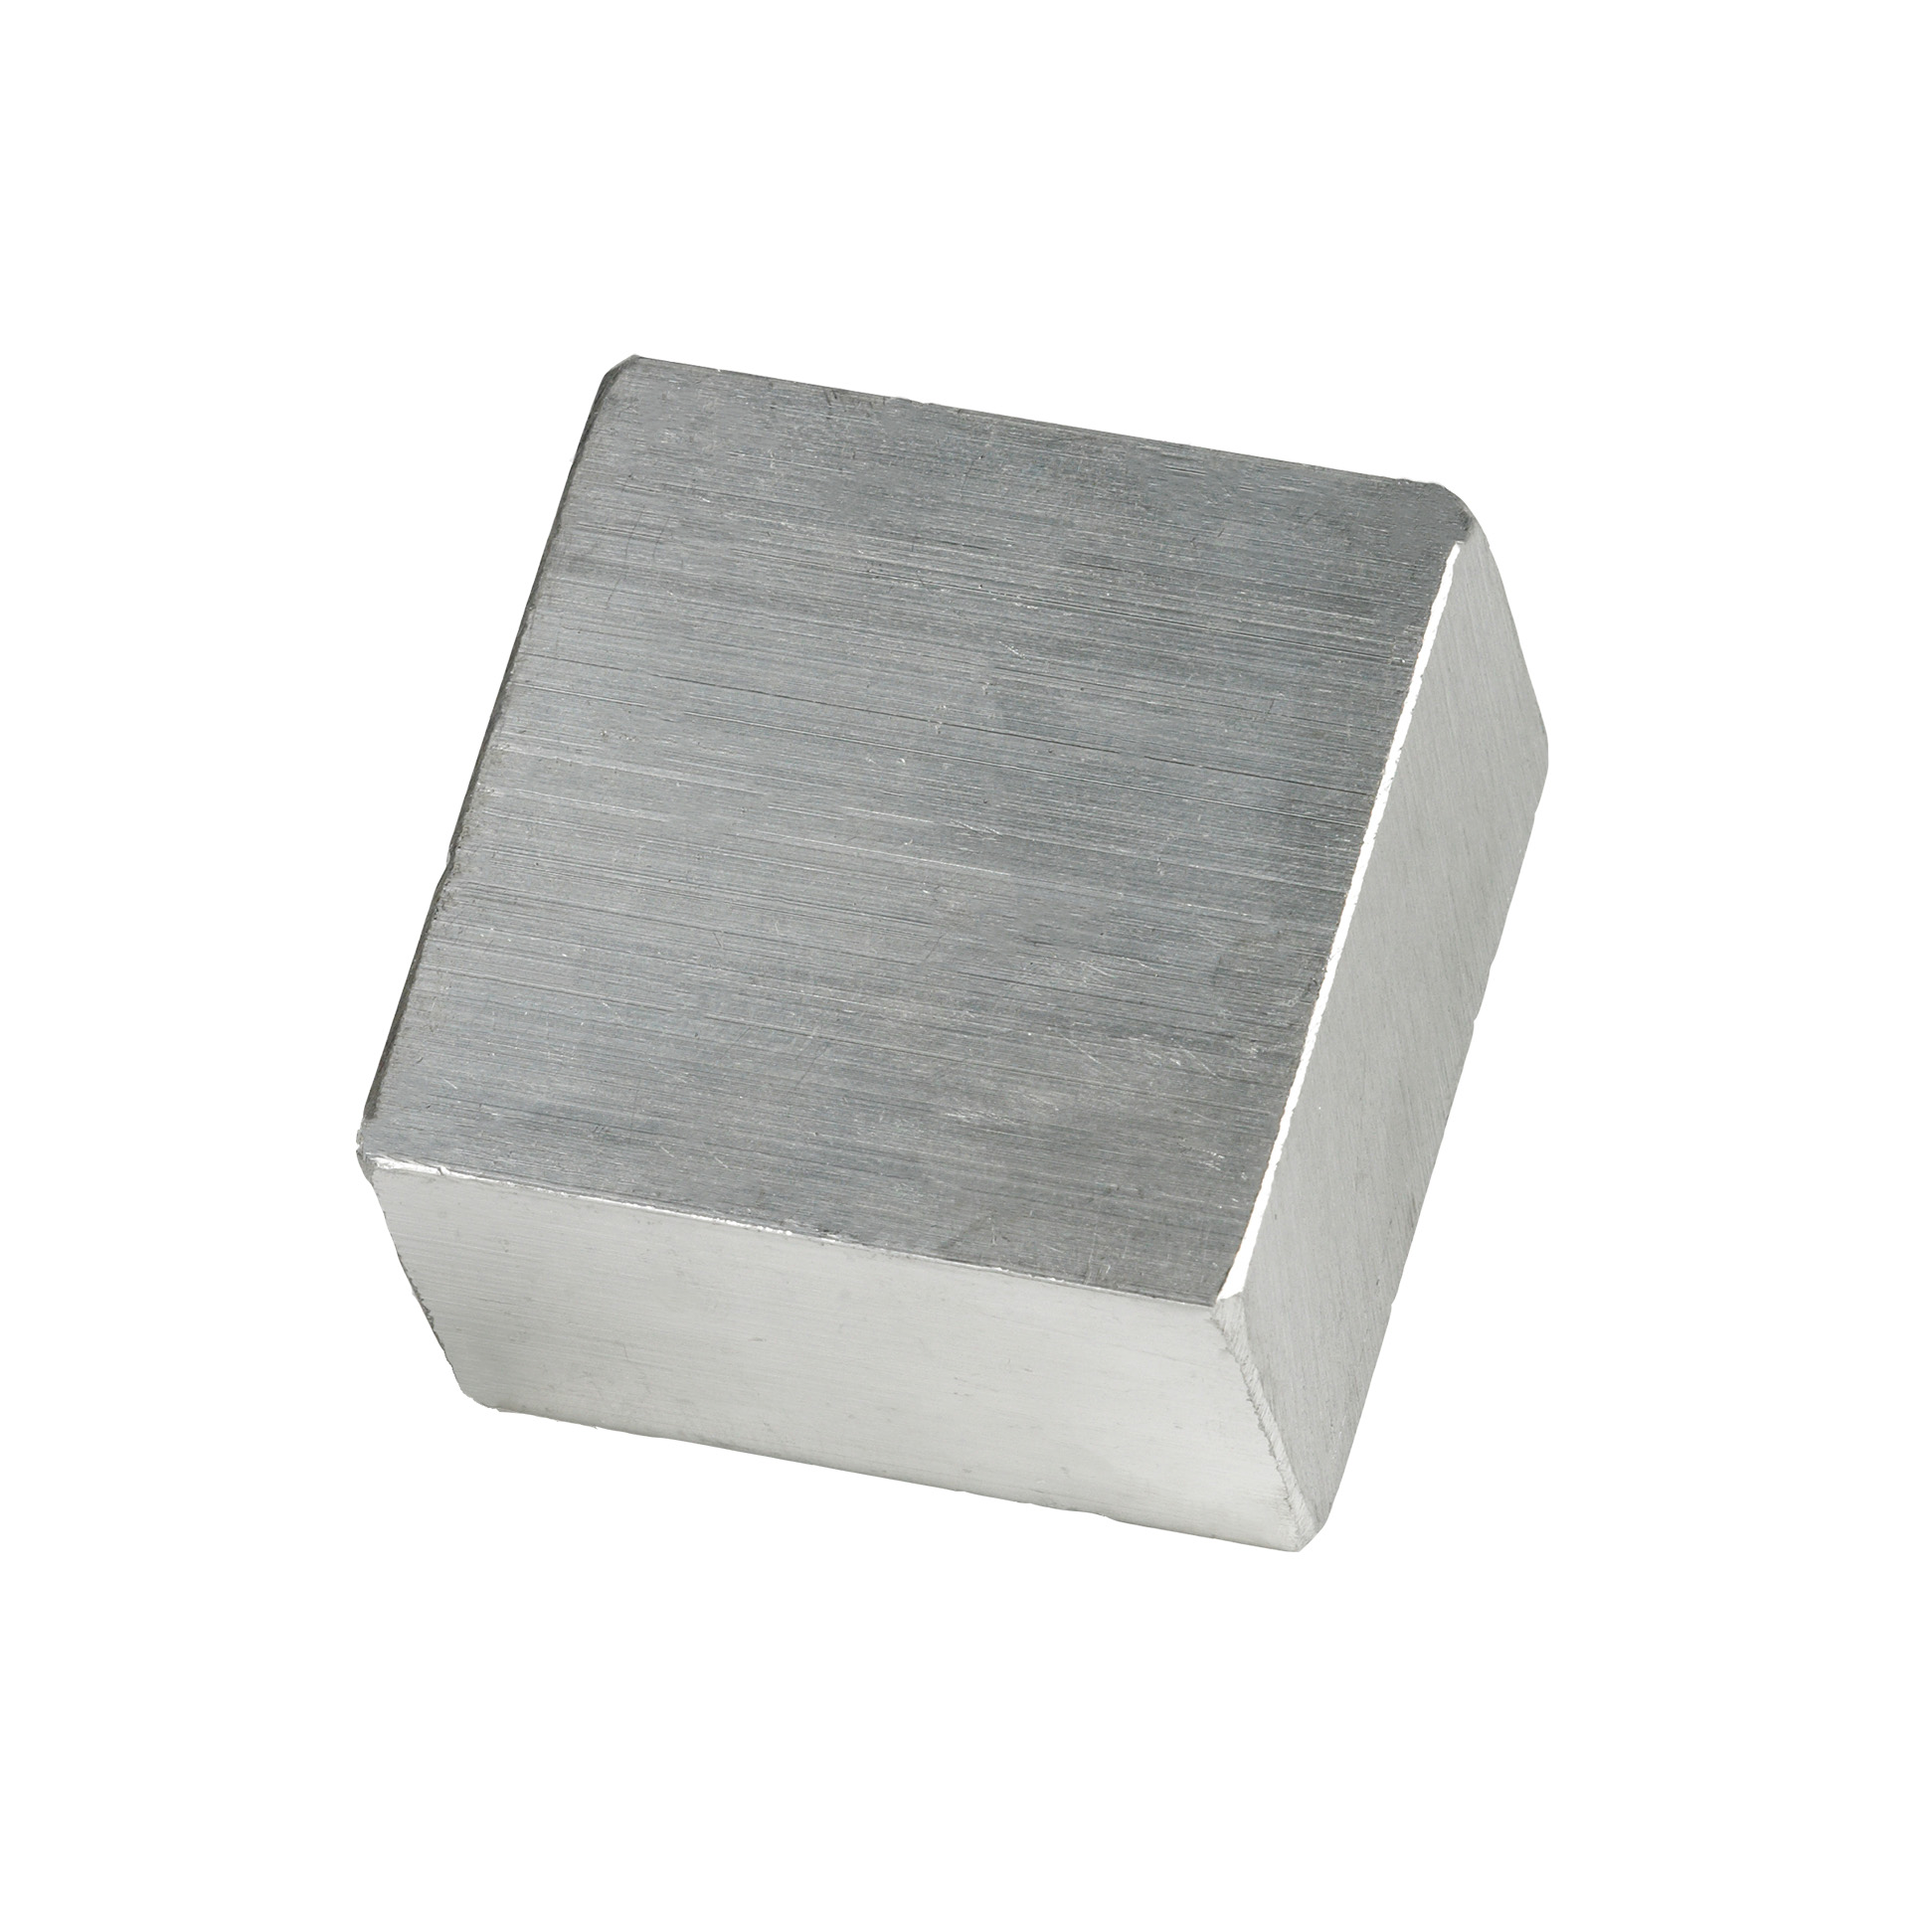 Küçük alüminyum blok 50 X 50 mm  